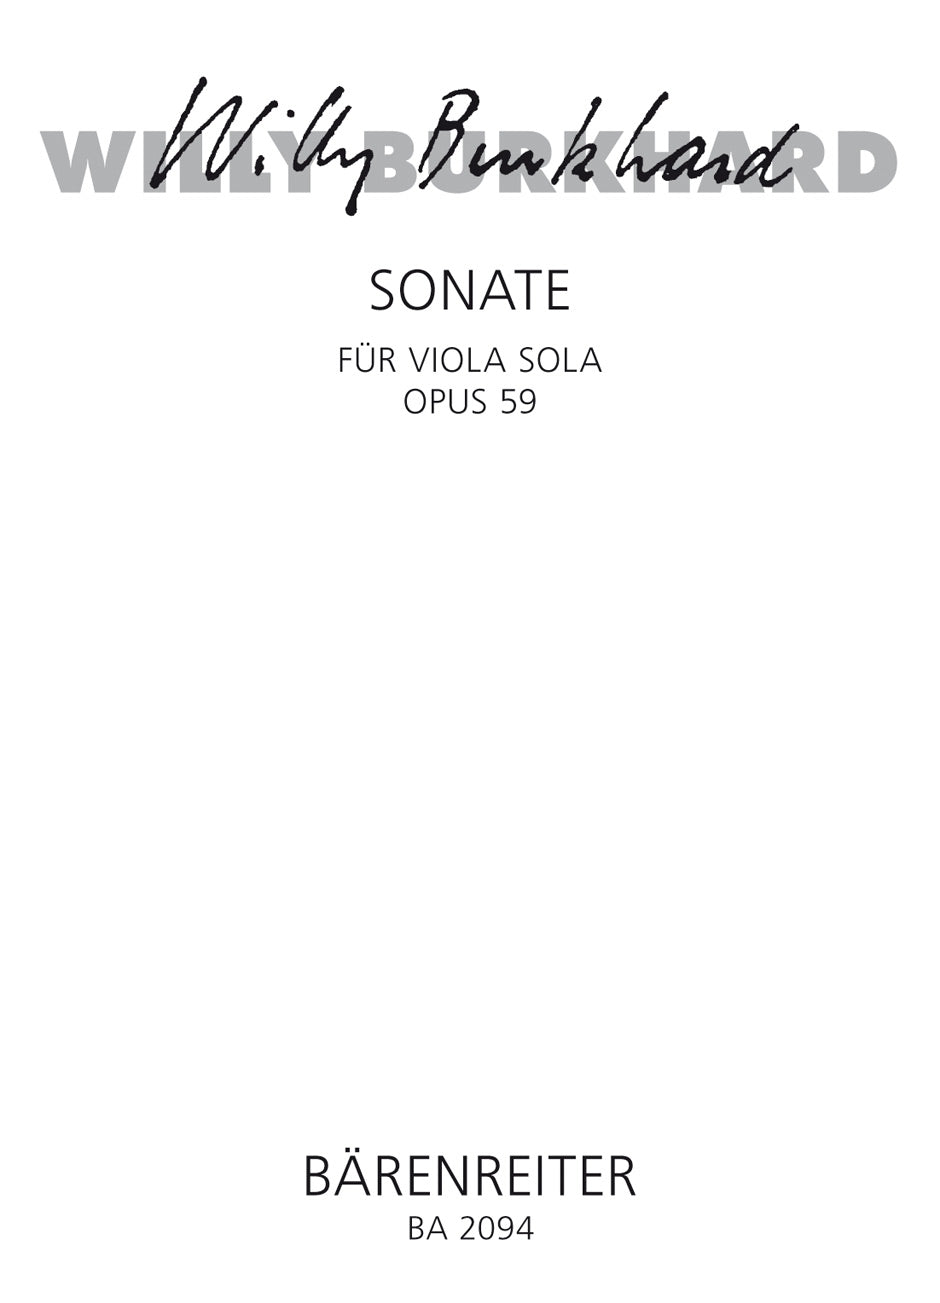 Burkhard: Sonata for Solo Viola, Op. 59